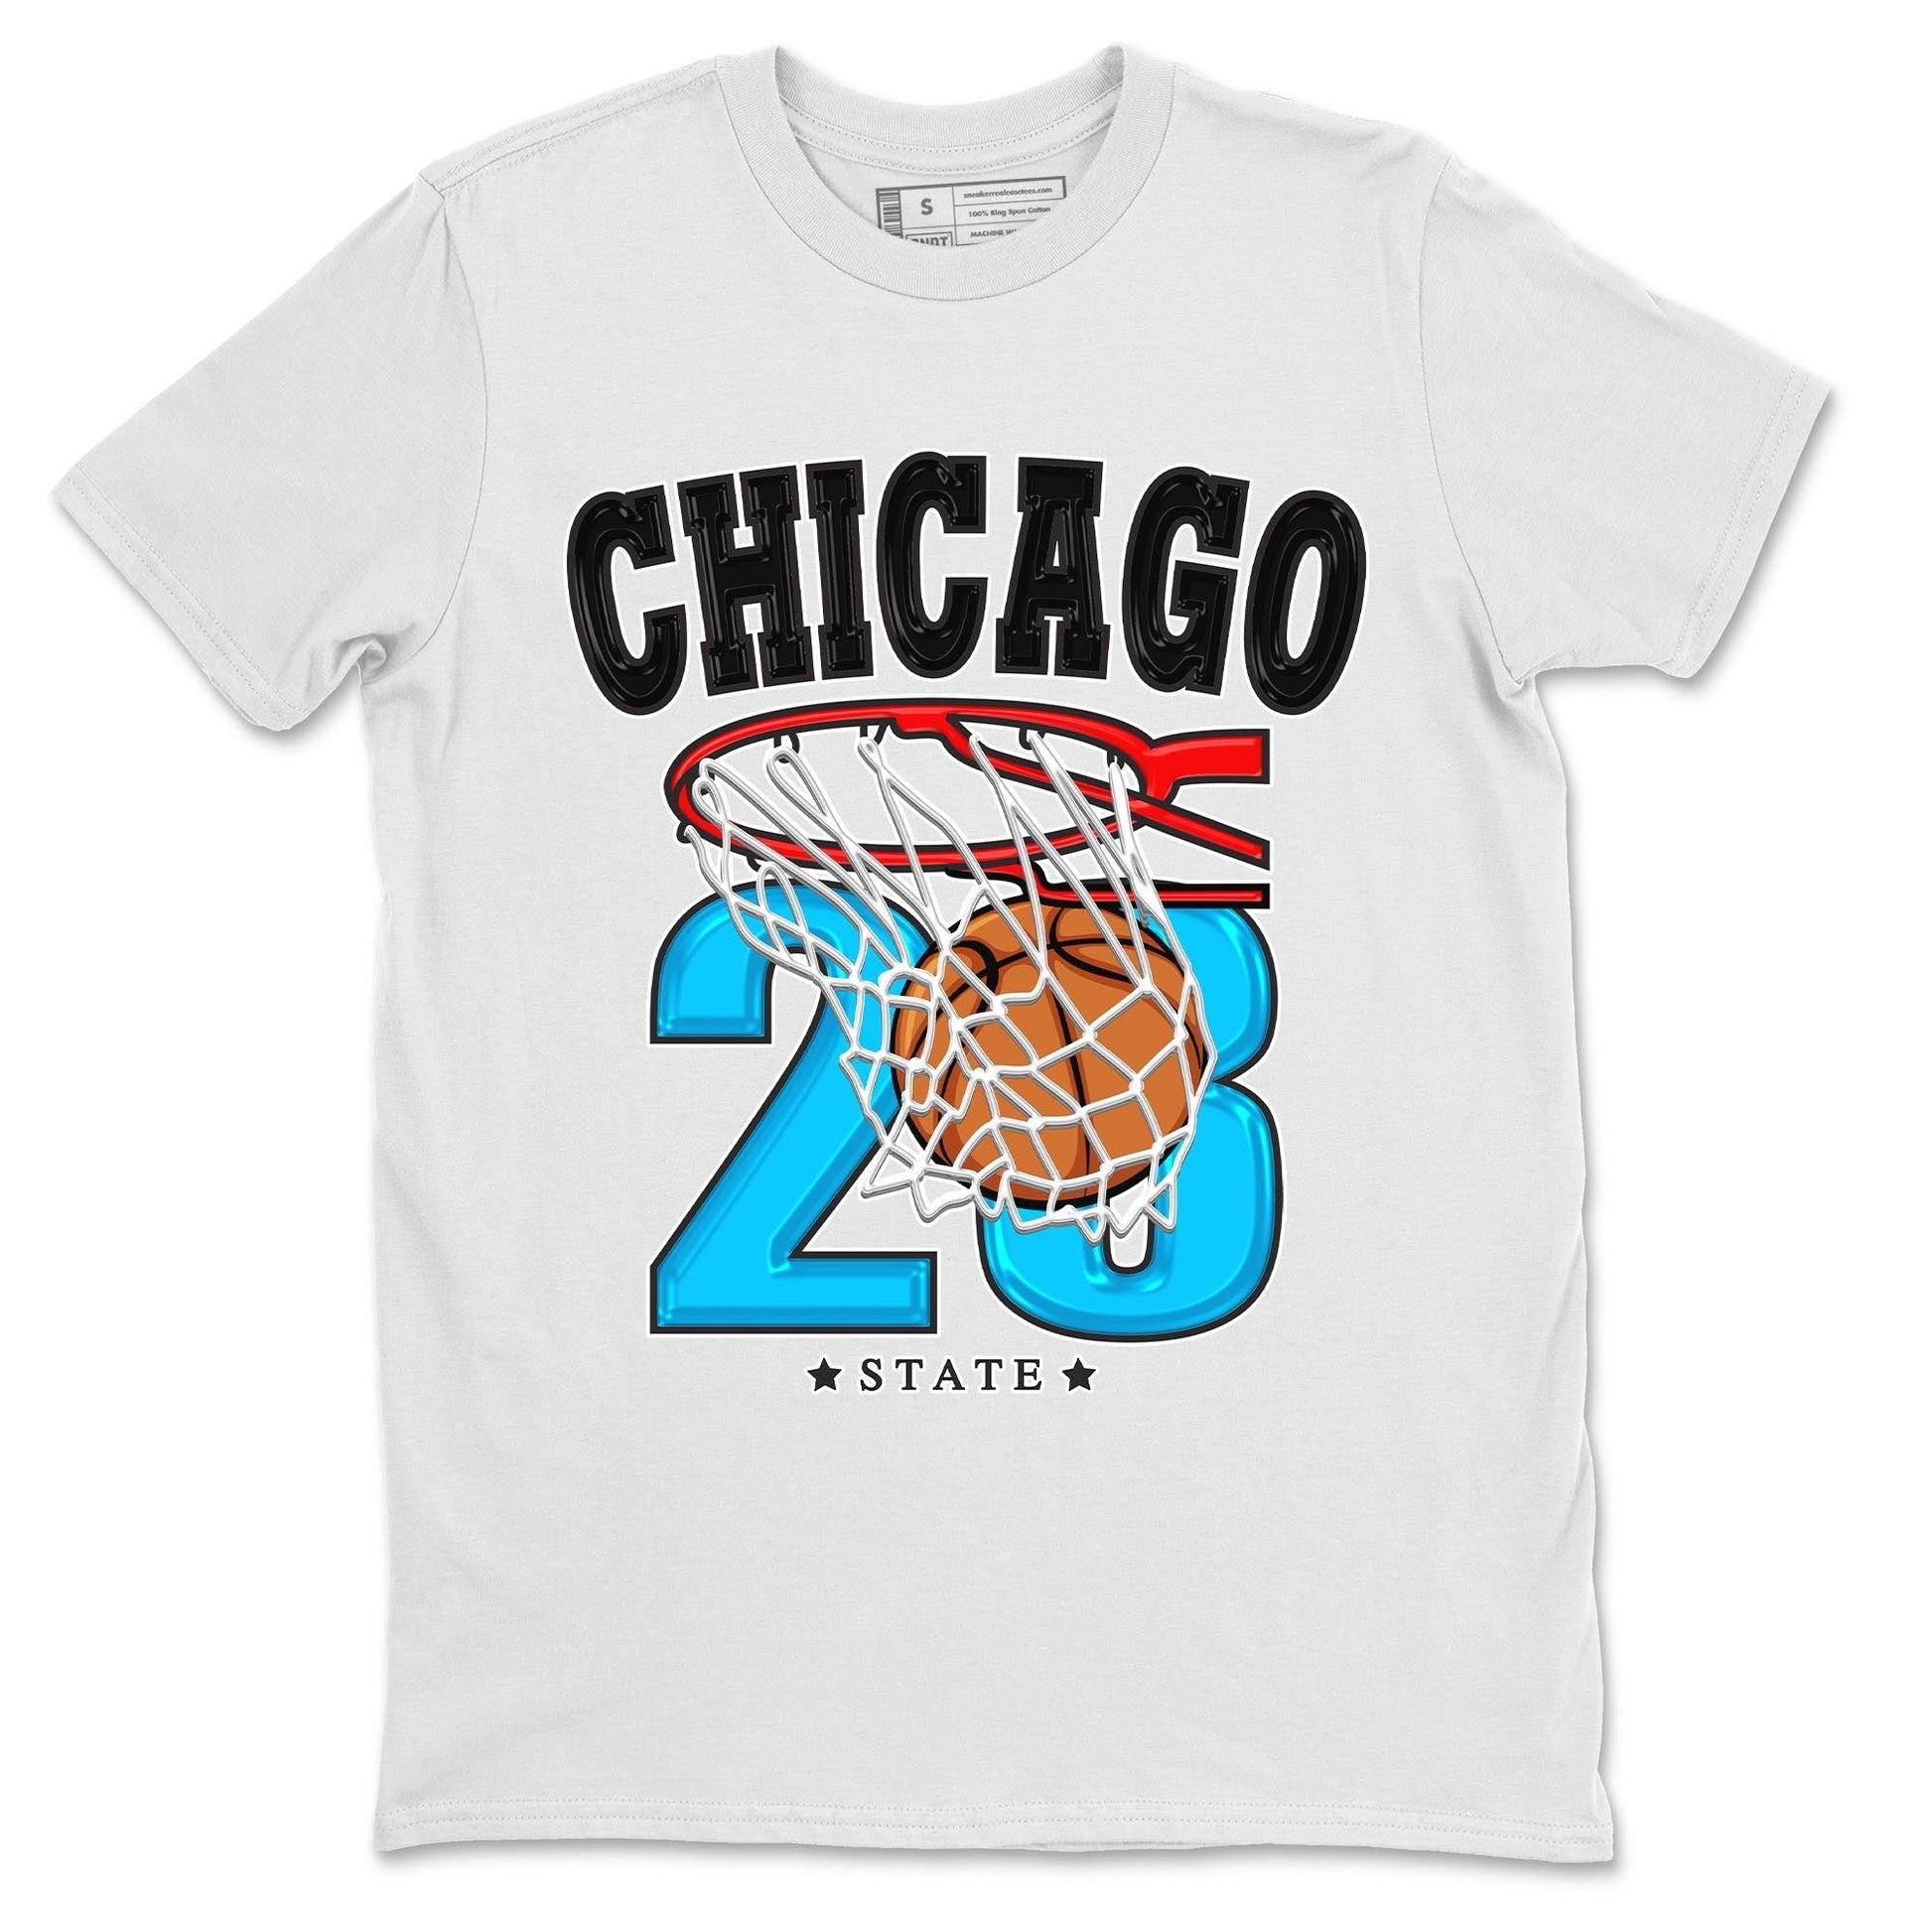 Air Jordan 1 Low UNC to Chicago shirt to match jordans Basketball Streetwear Sneaker Shirt Air Jordan 1 UNC to Chicago Drip Gear Zone Sneaker Matching Clothing Unisex White 2 T-Shirt